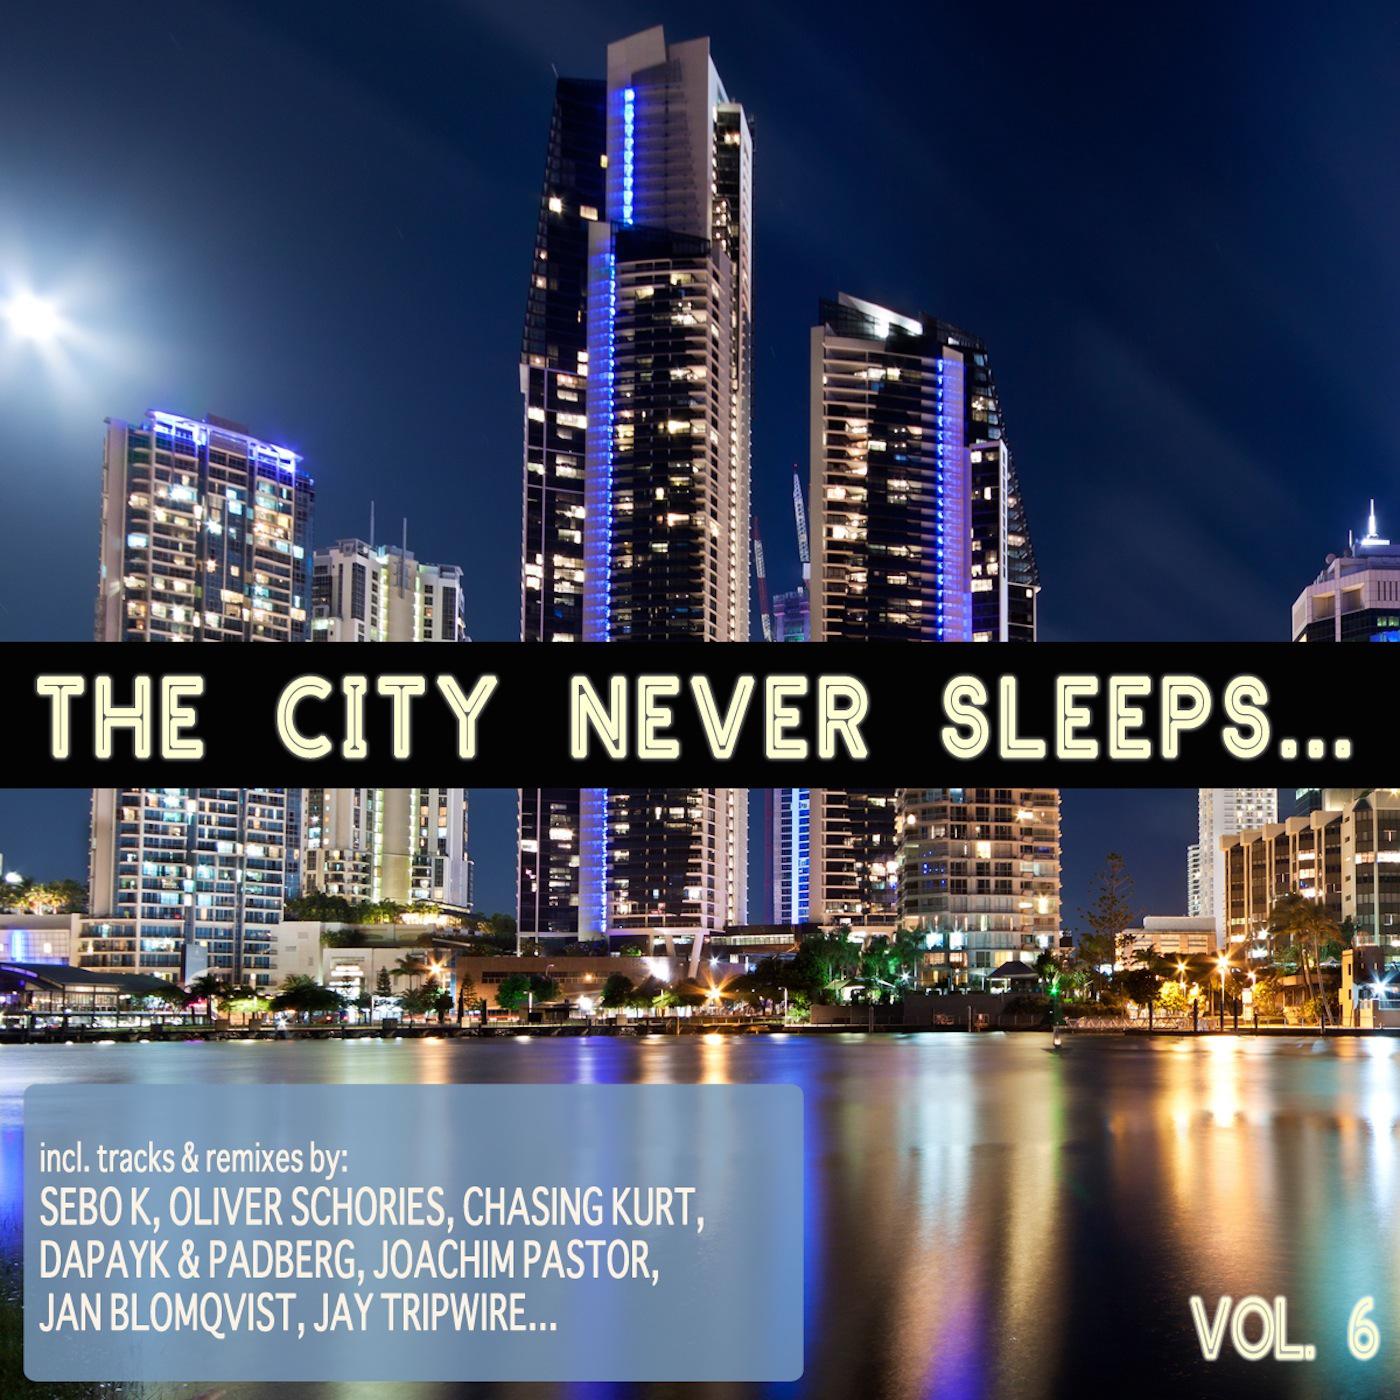 The City Never Sleeps, Vol. 6